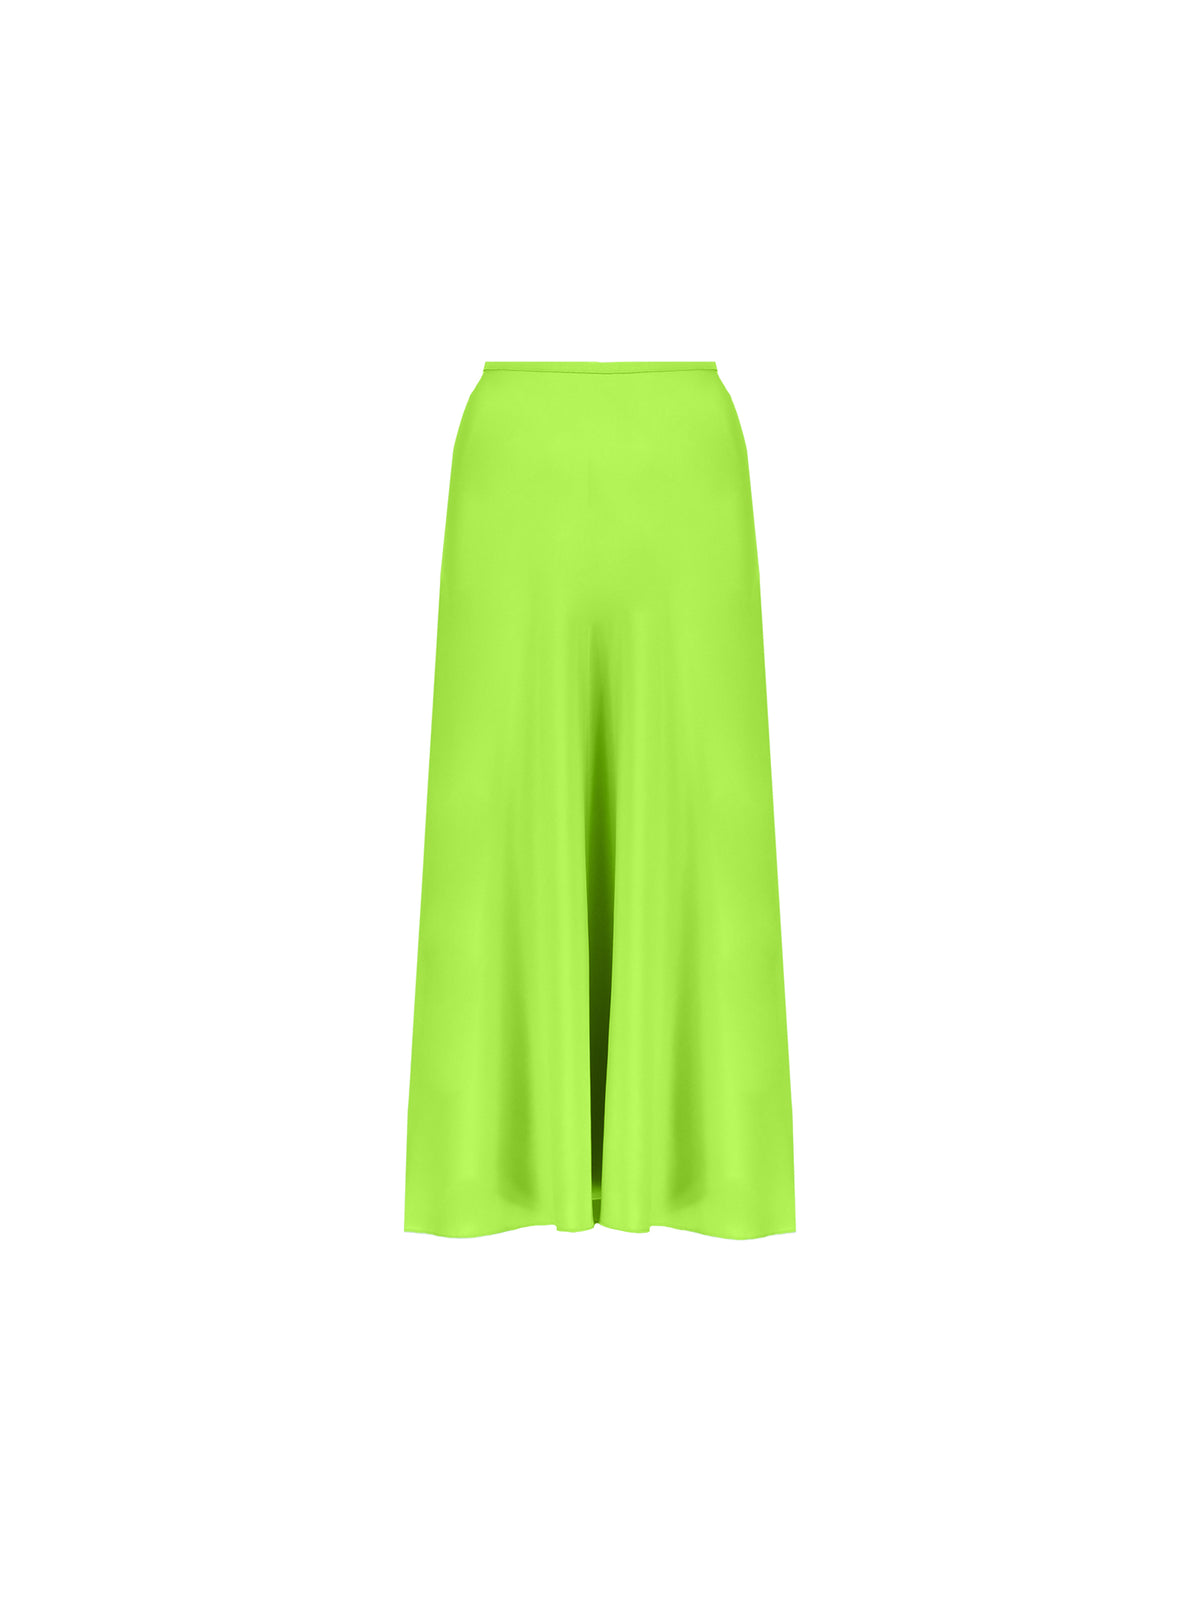 Green Satin Bias Midi Skirt